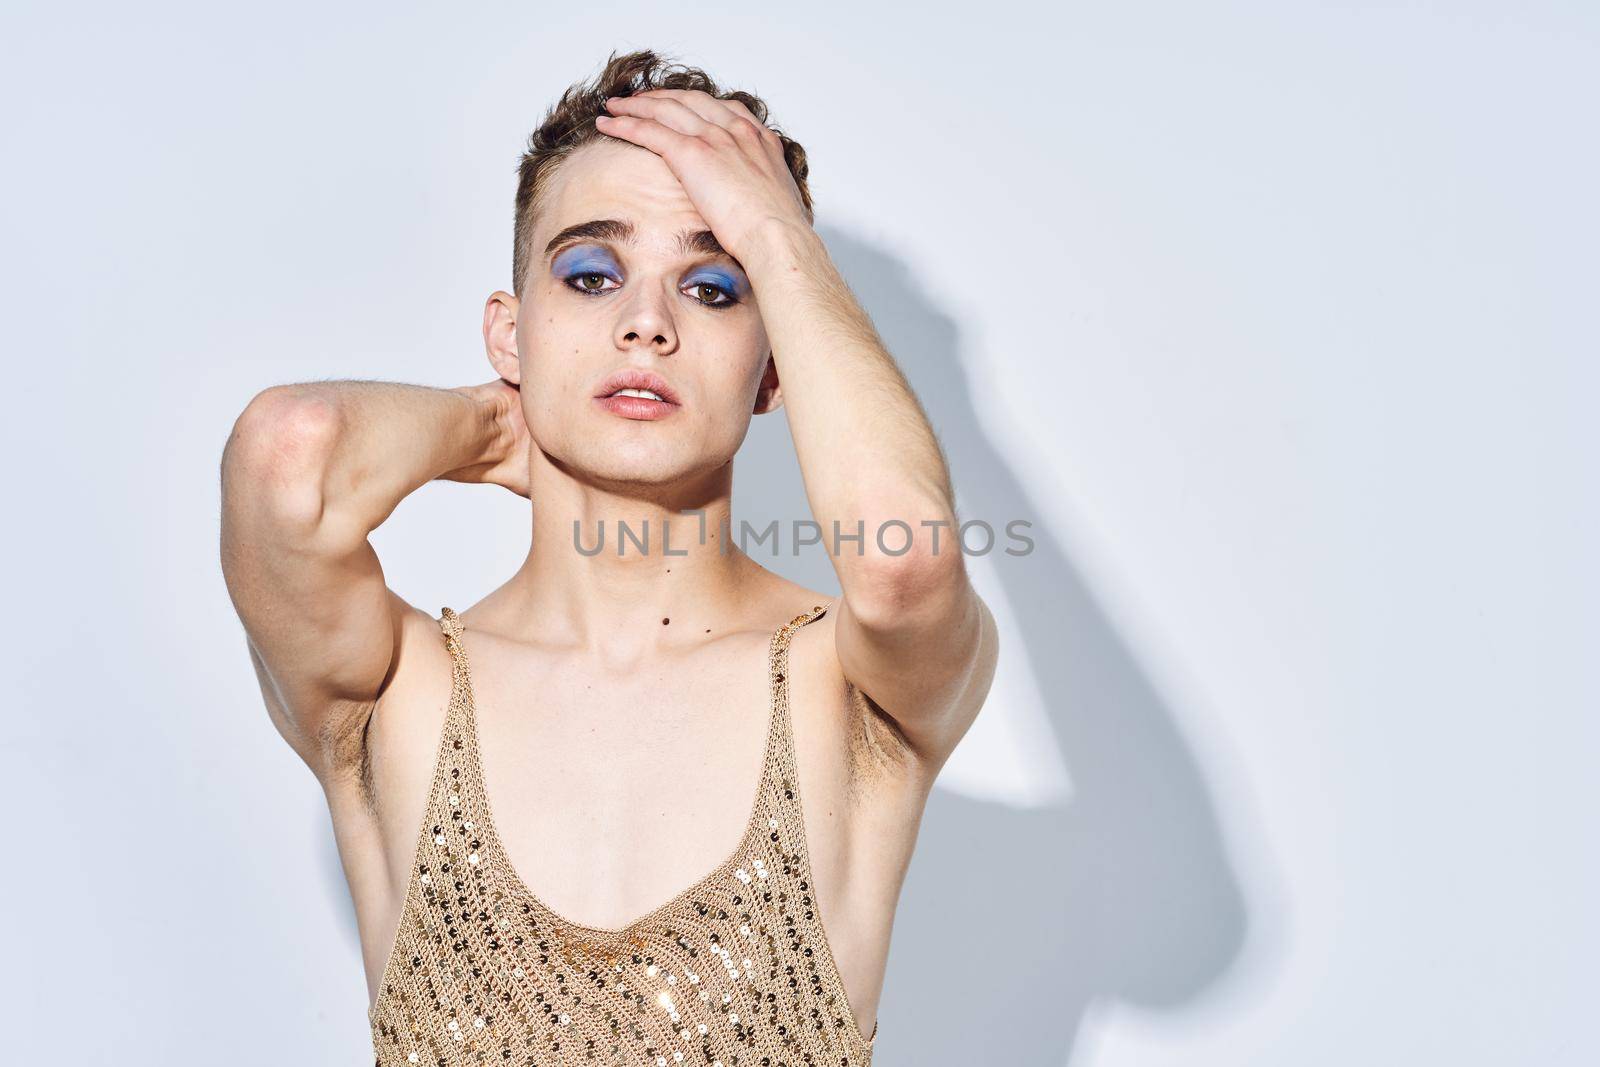 man with female makeup dress posing fashion transgender by Vichizh